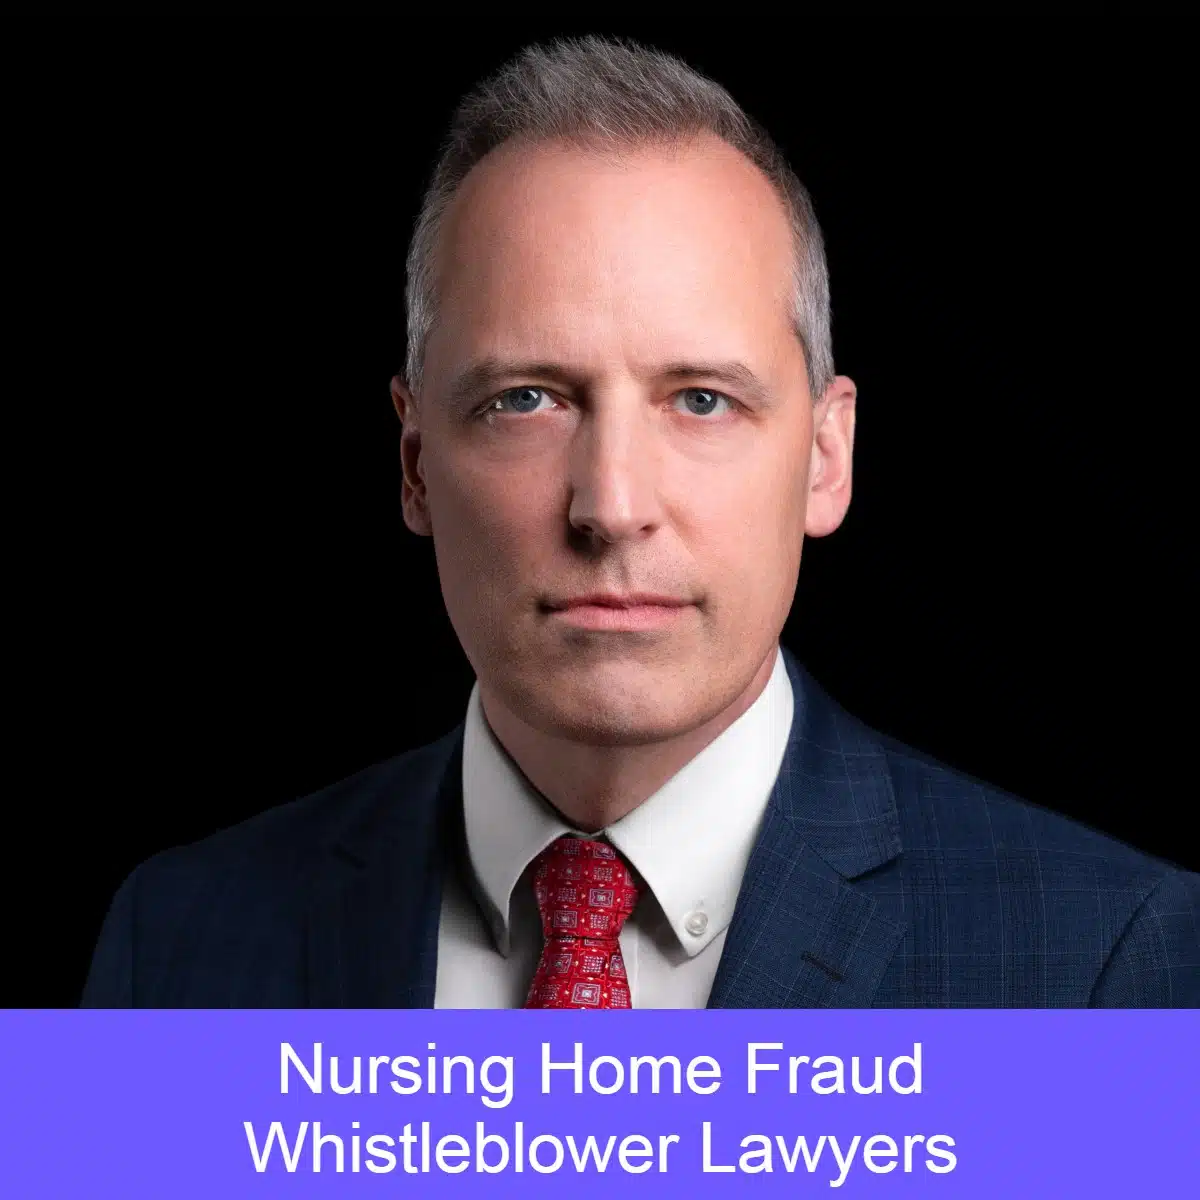 Nursing home fraud whistleblower lawyers - nursing home qui tam attorneys